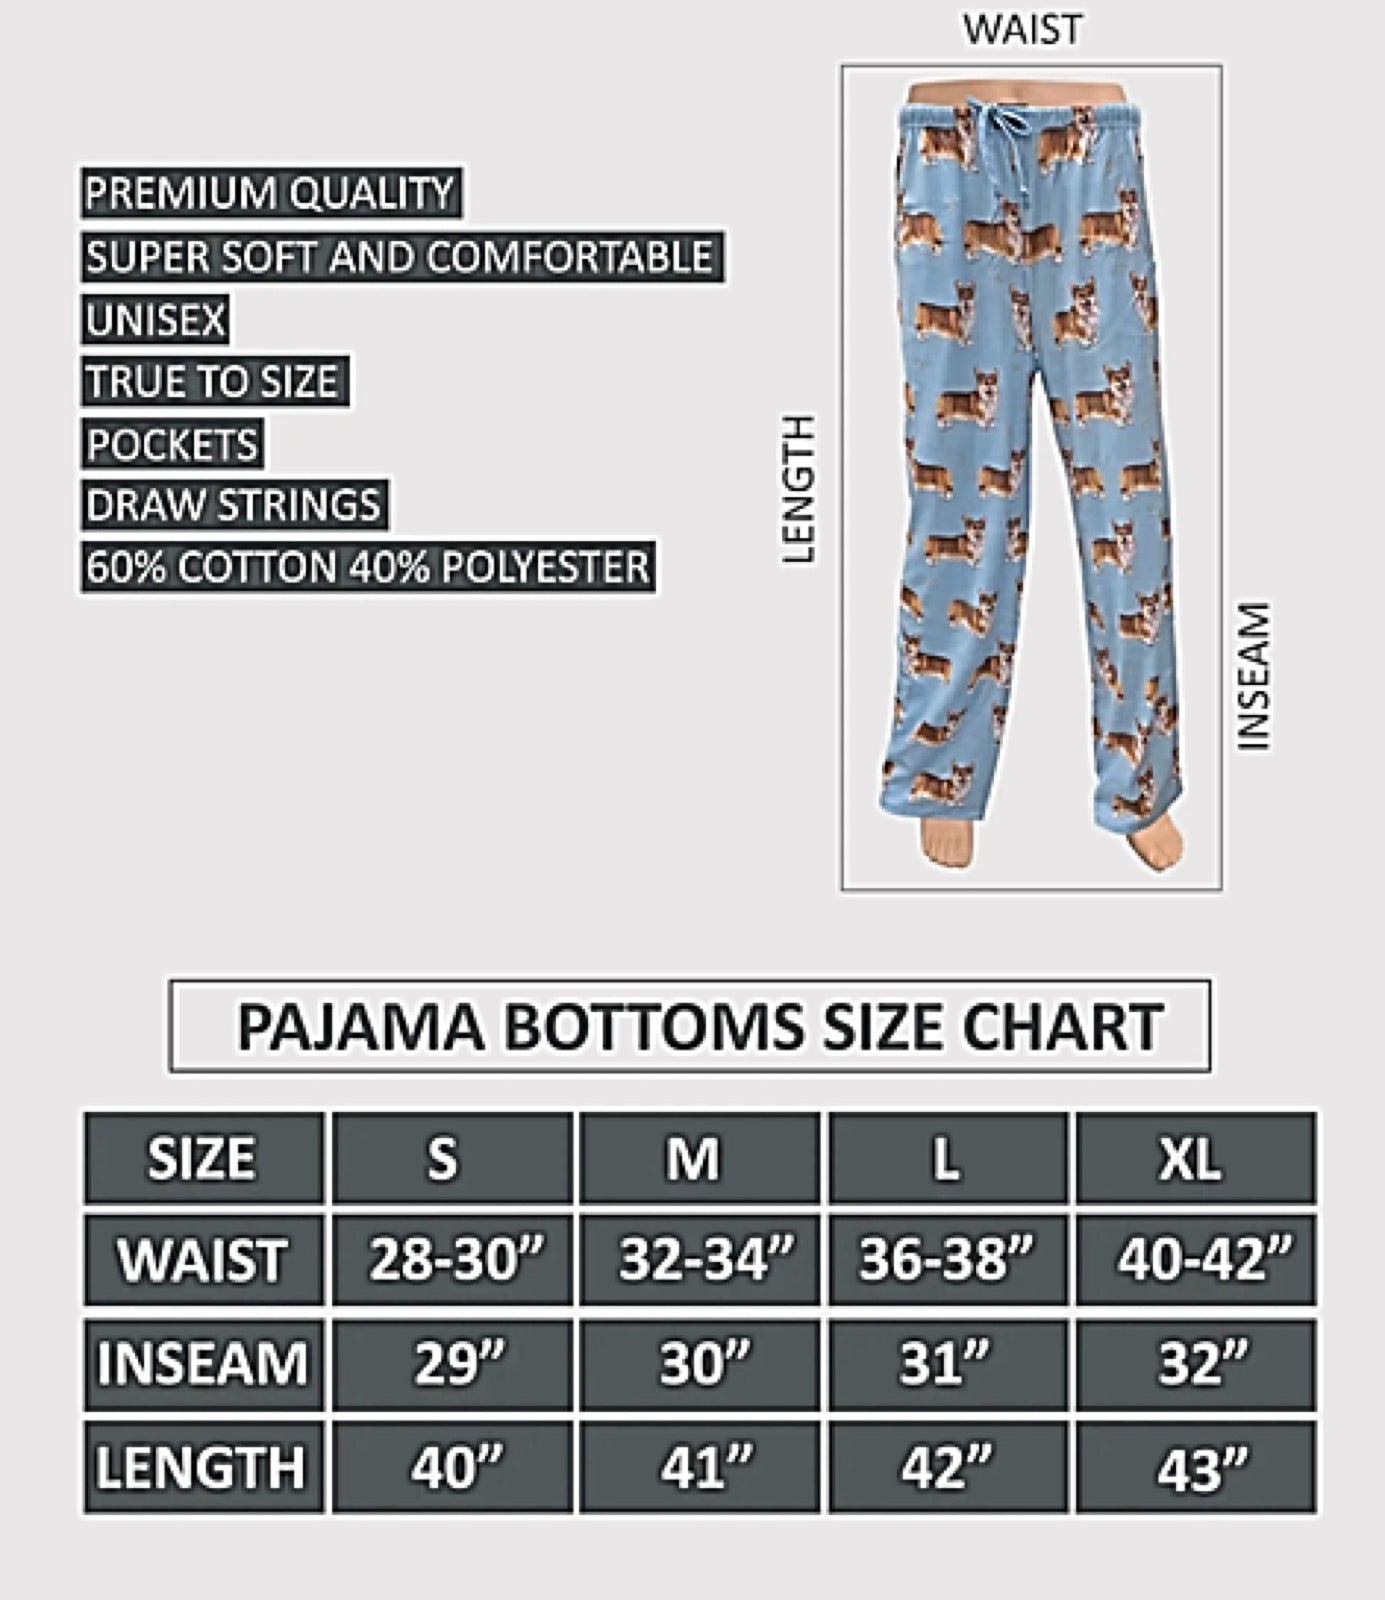 Corgi Pajamas Merch & Gifts for Sale